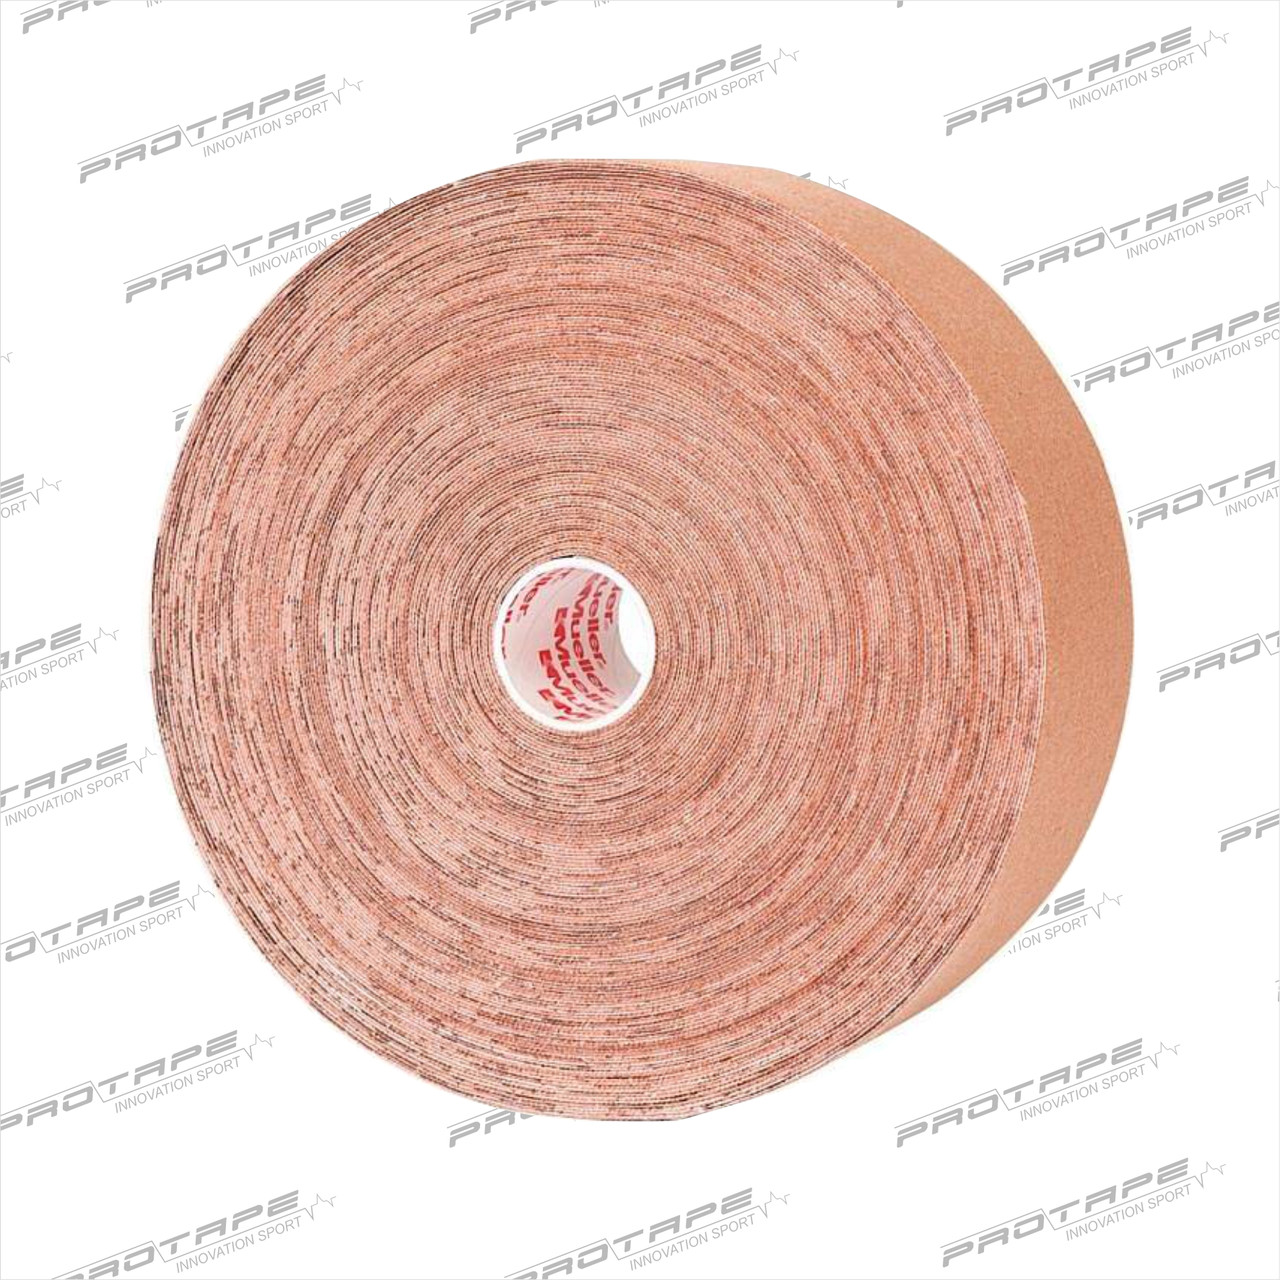 Кинезио тейп Mueller Kinesiology Tape Beige 30 м, 27634, бежевый цвет, 5.0см размер